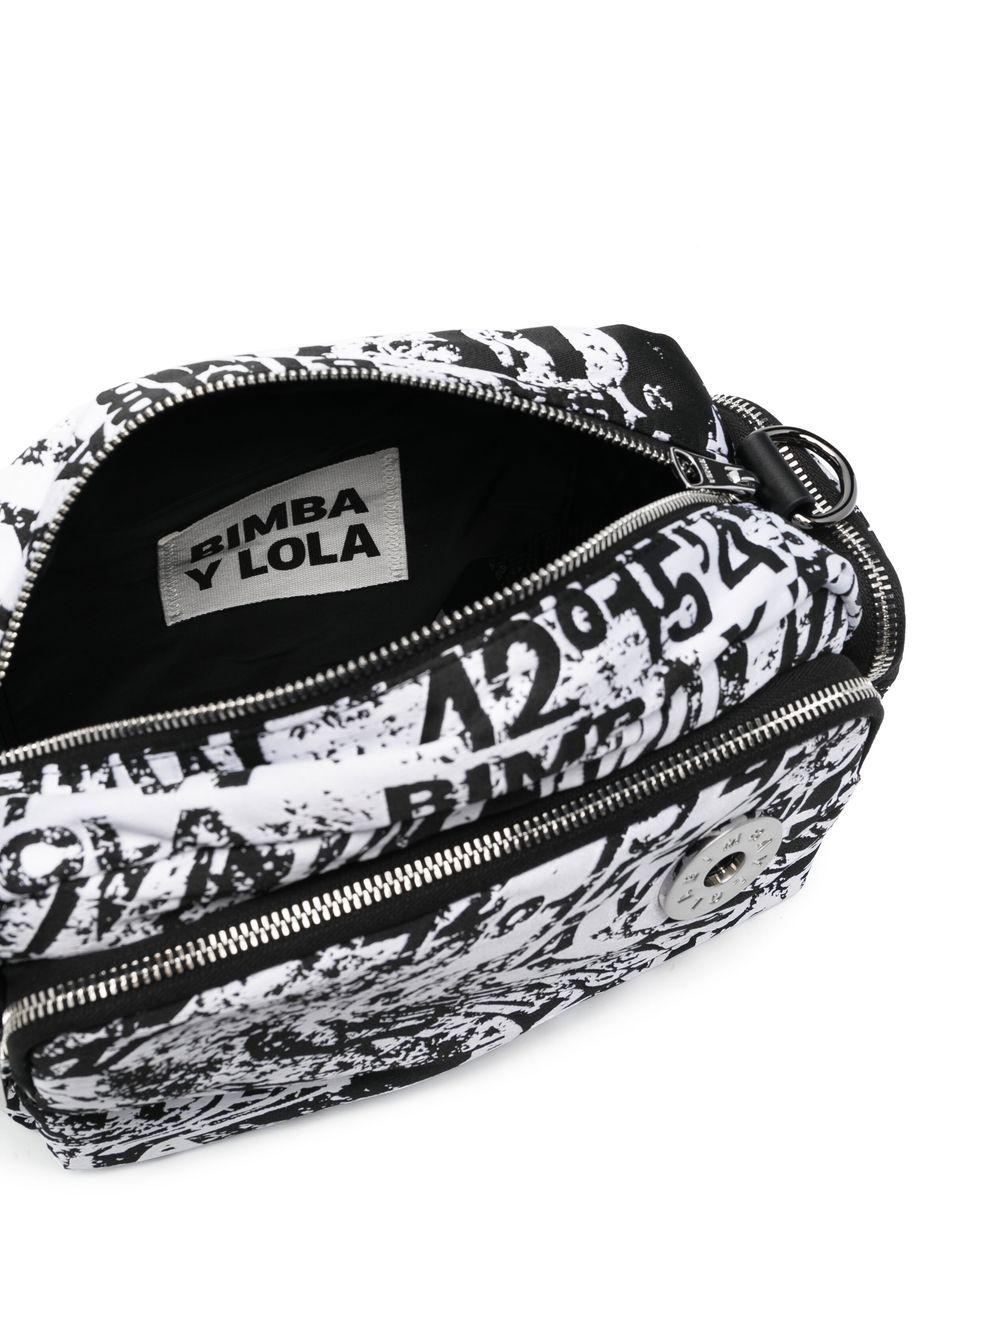 Bimba y Lola Small Pelota logo-print Crossbody Bag - Farfetch in